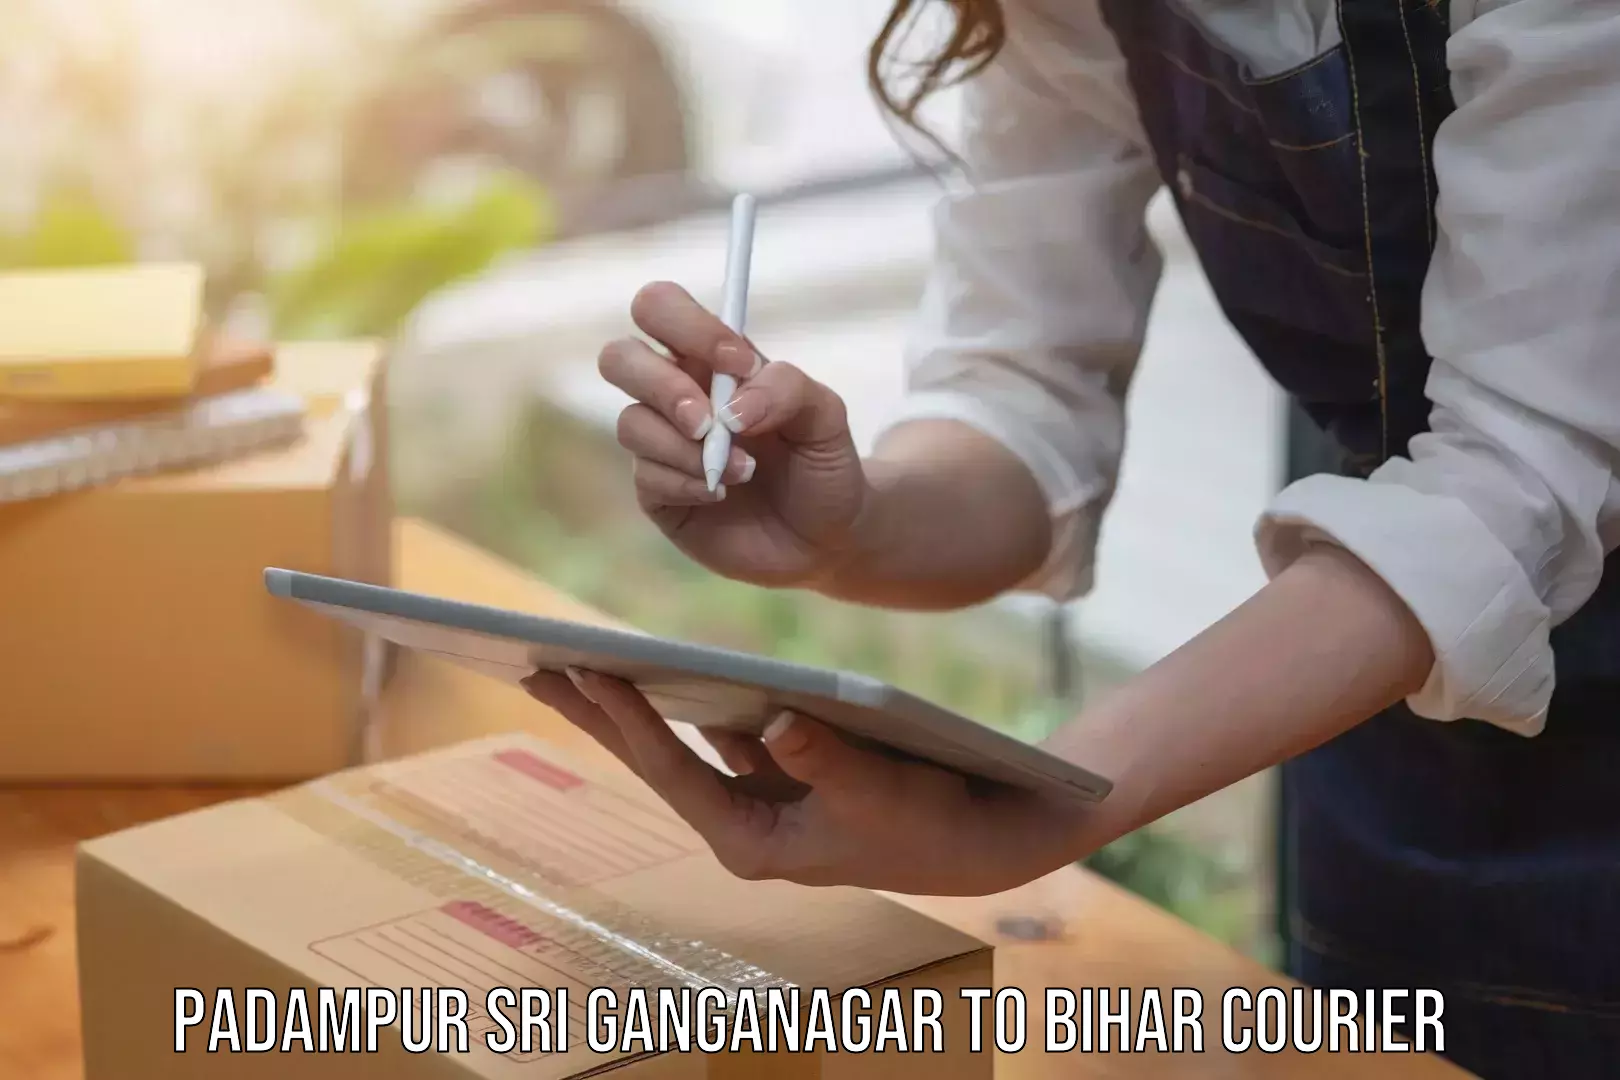 Multi-city courier Padampur Sri Ganganagar to Bihar